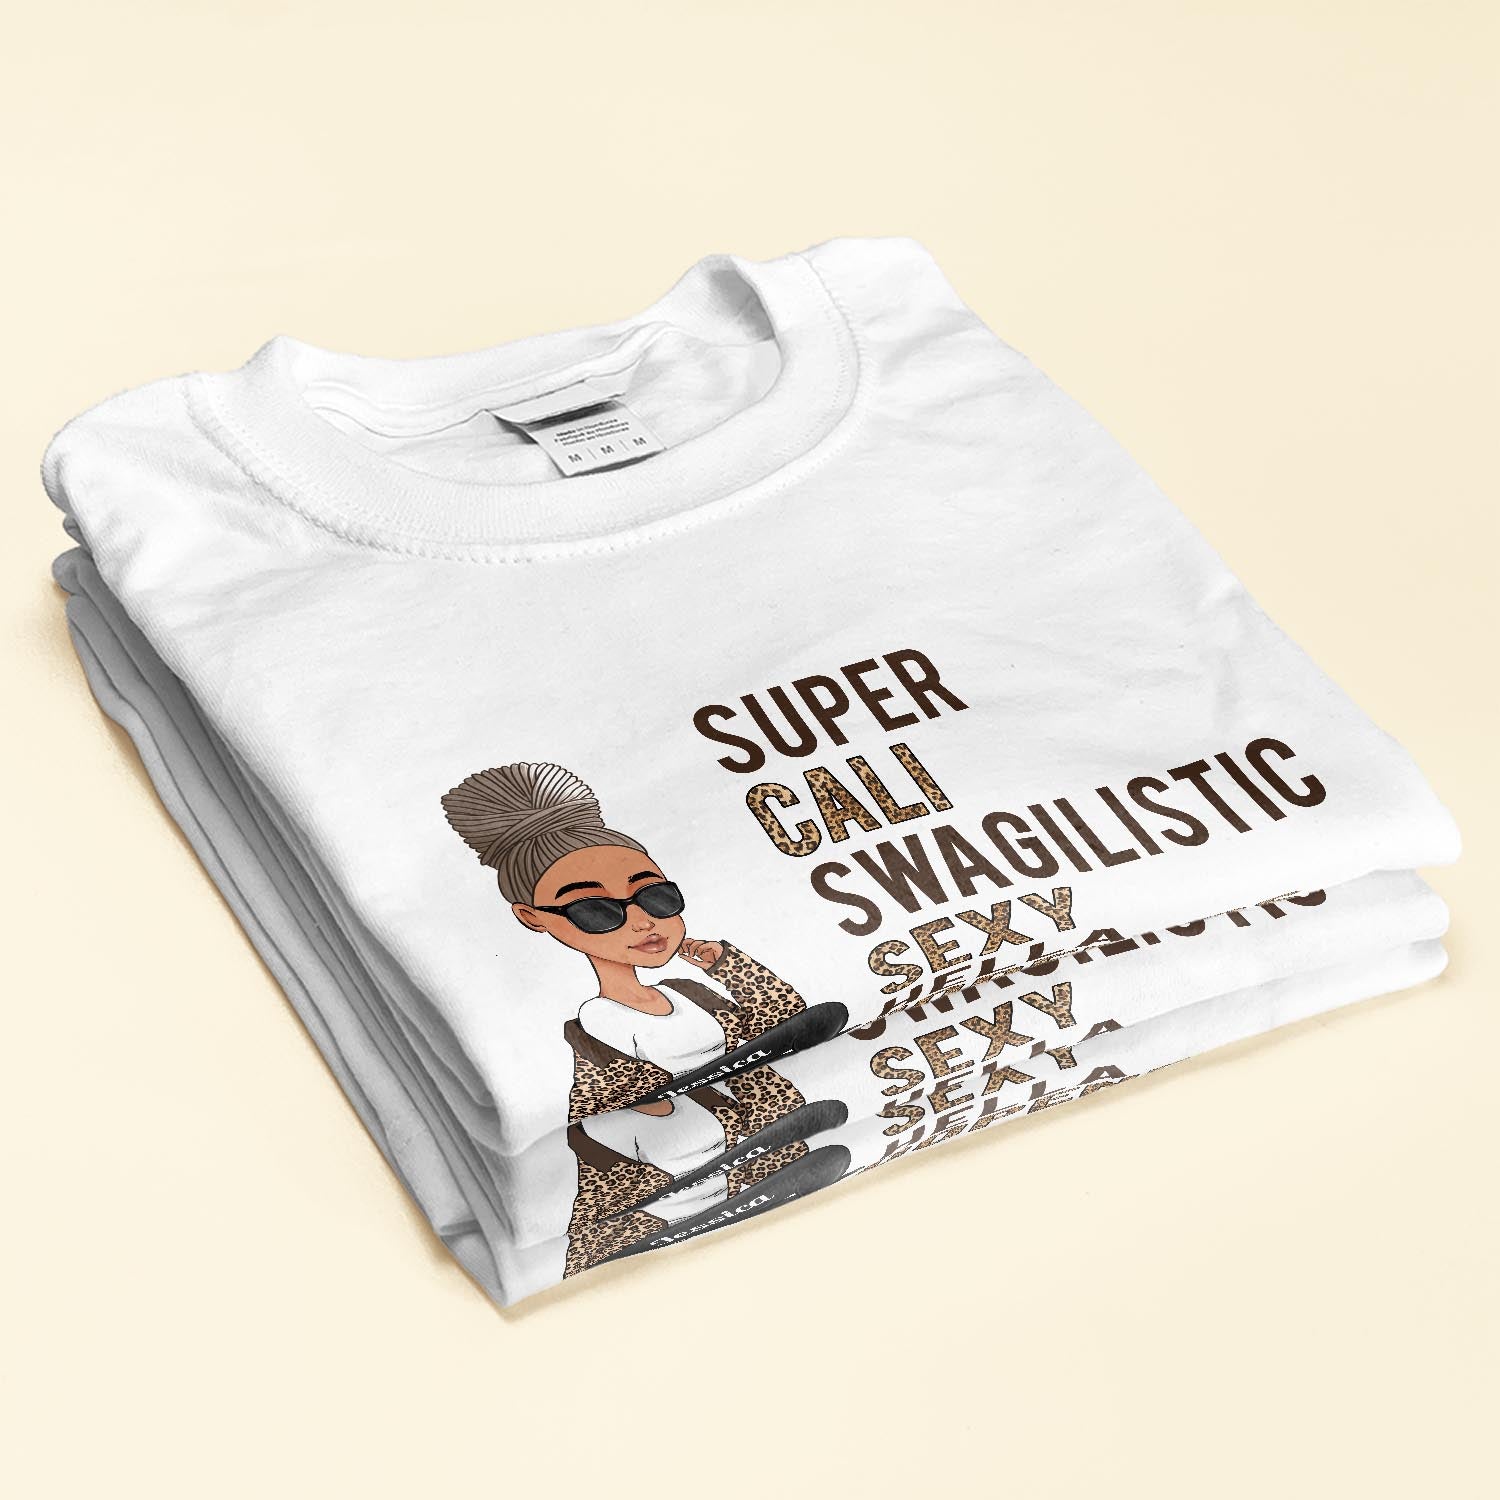 Super Cali Swagalistic - Personalized Shirt - Birthday Gift For Black Girl, Black Woman - Sassy Girl